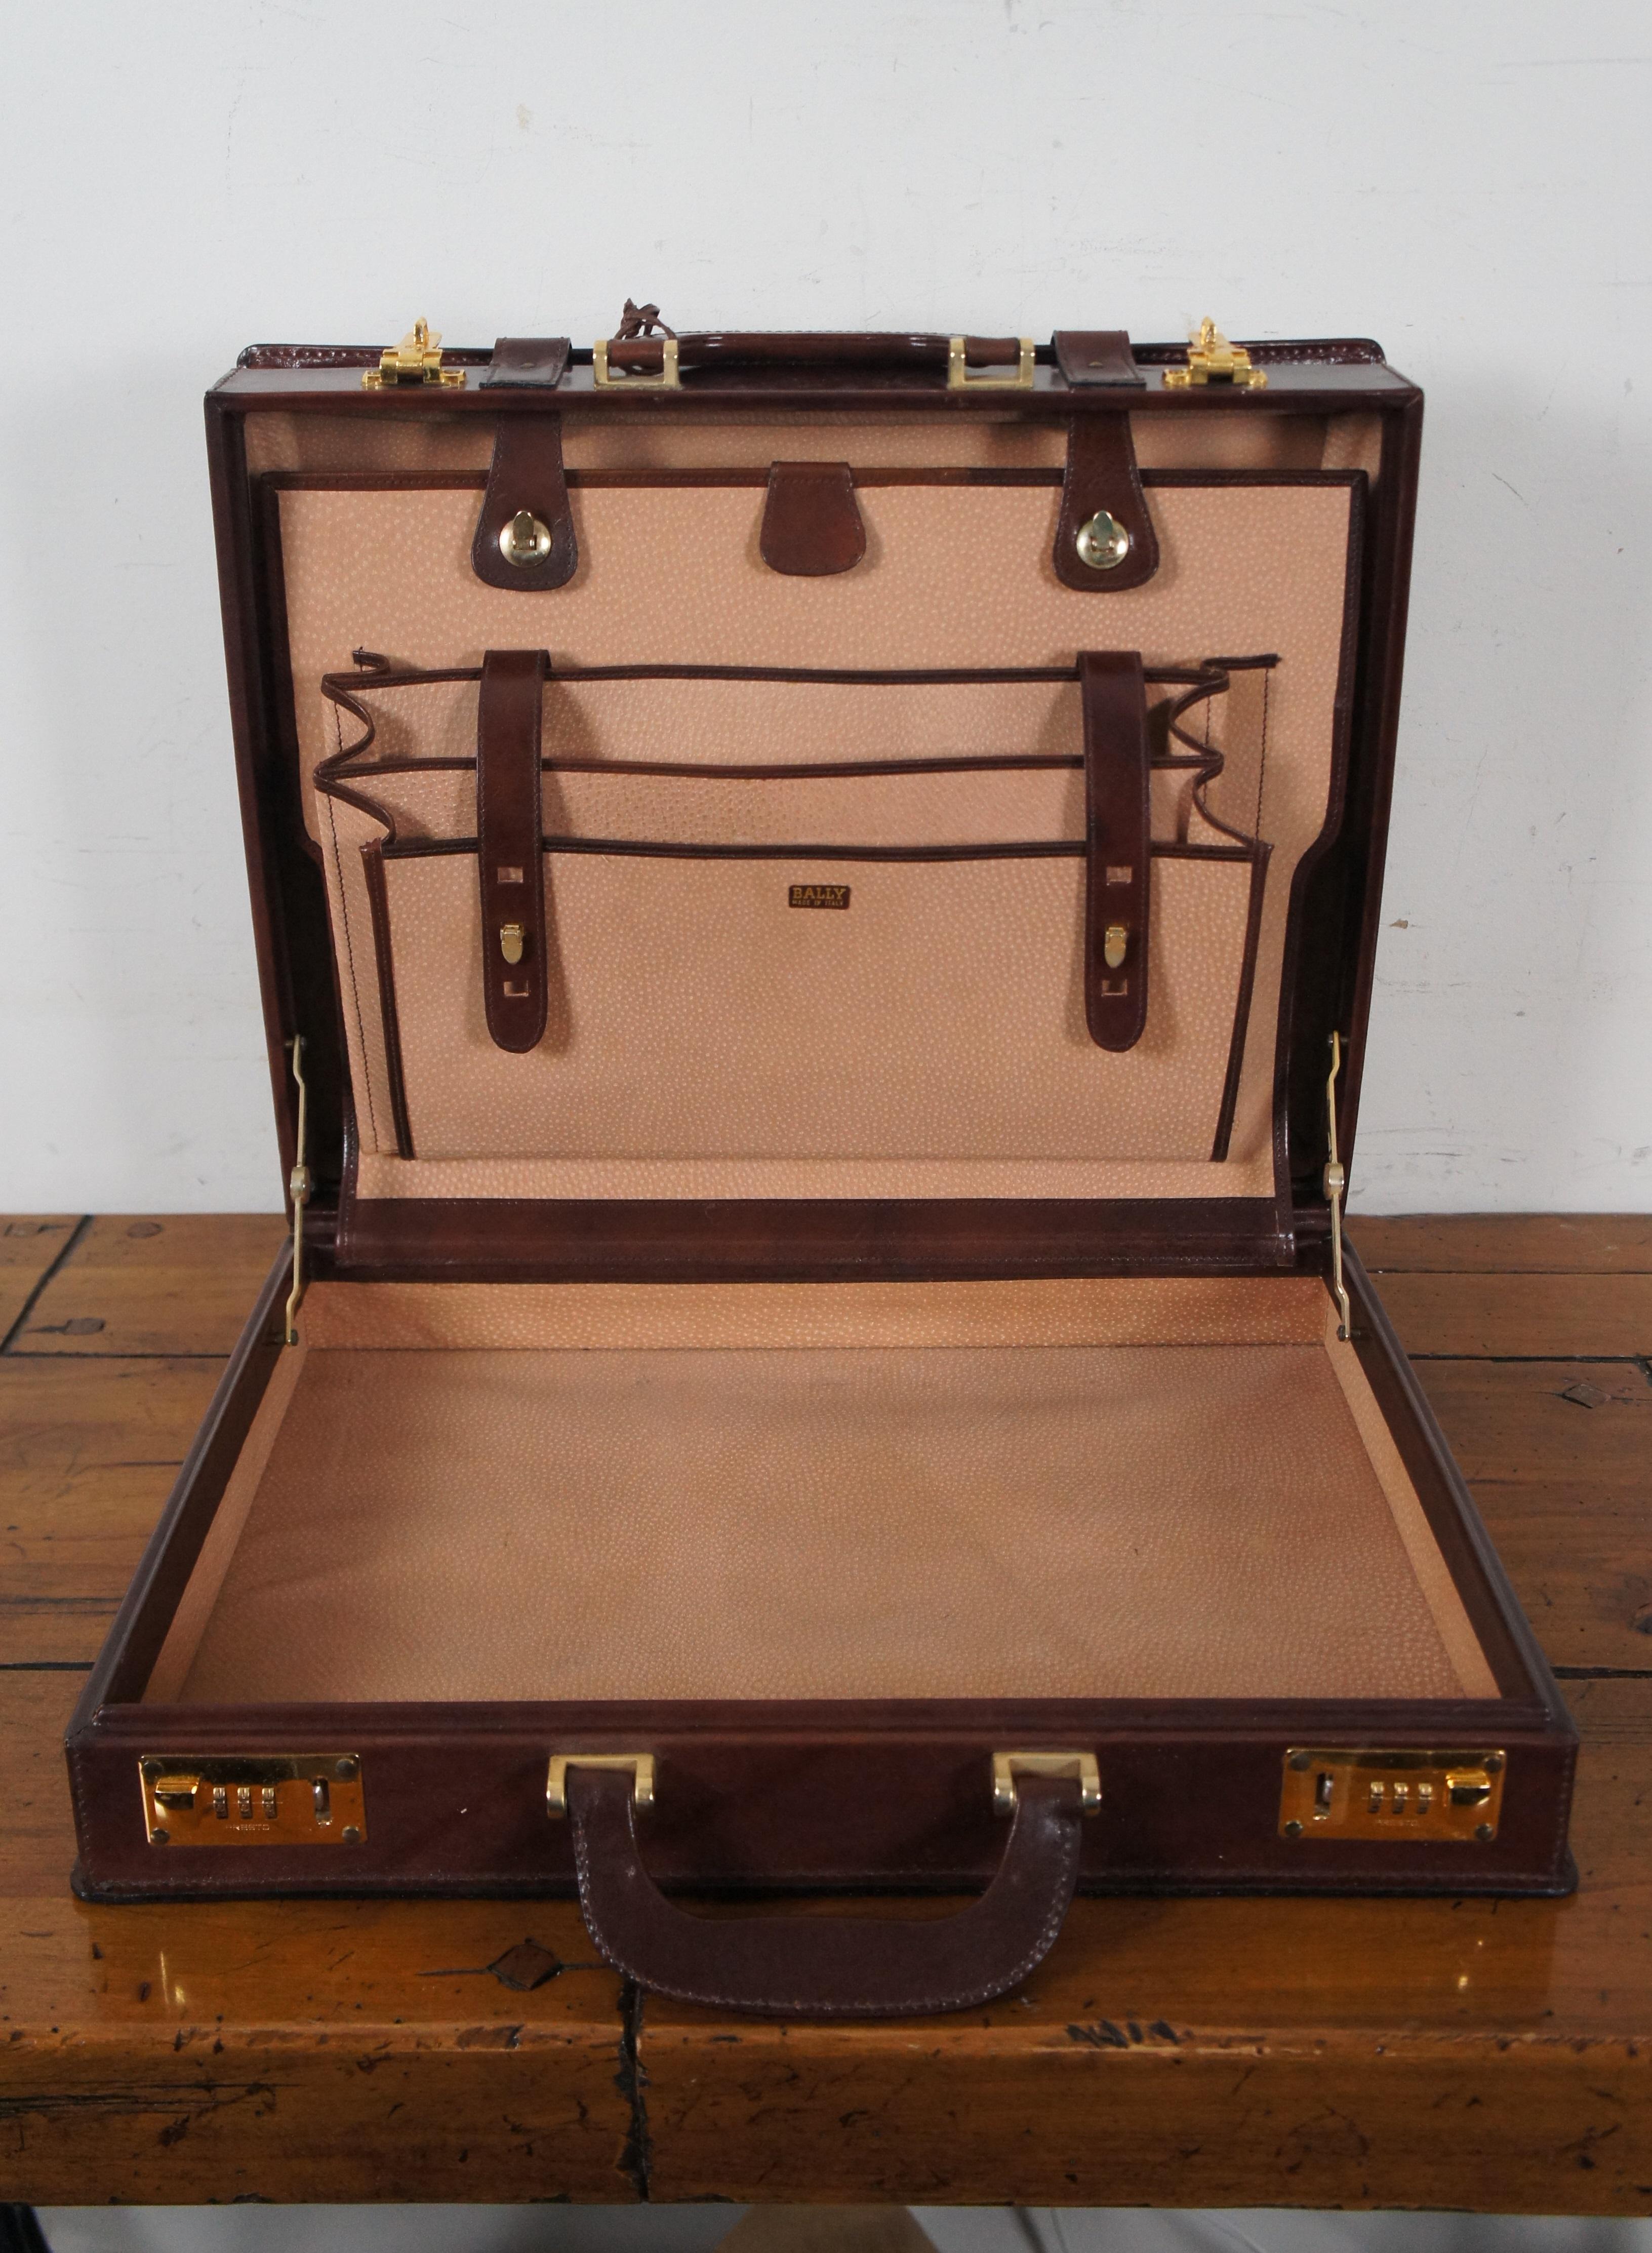 Italian Bally Presto Lock Dark Brown Leather Expandable Executive Briefcase  For Sale 1